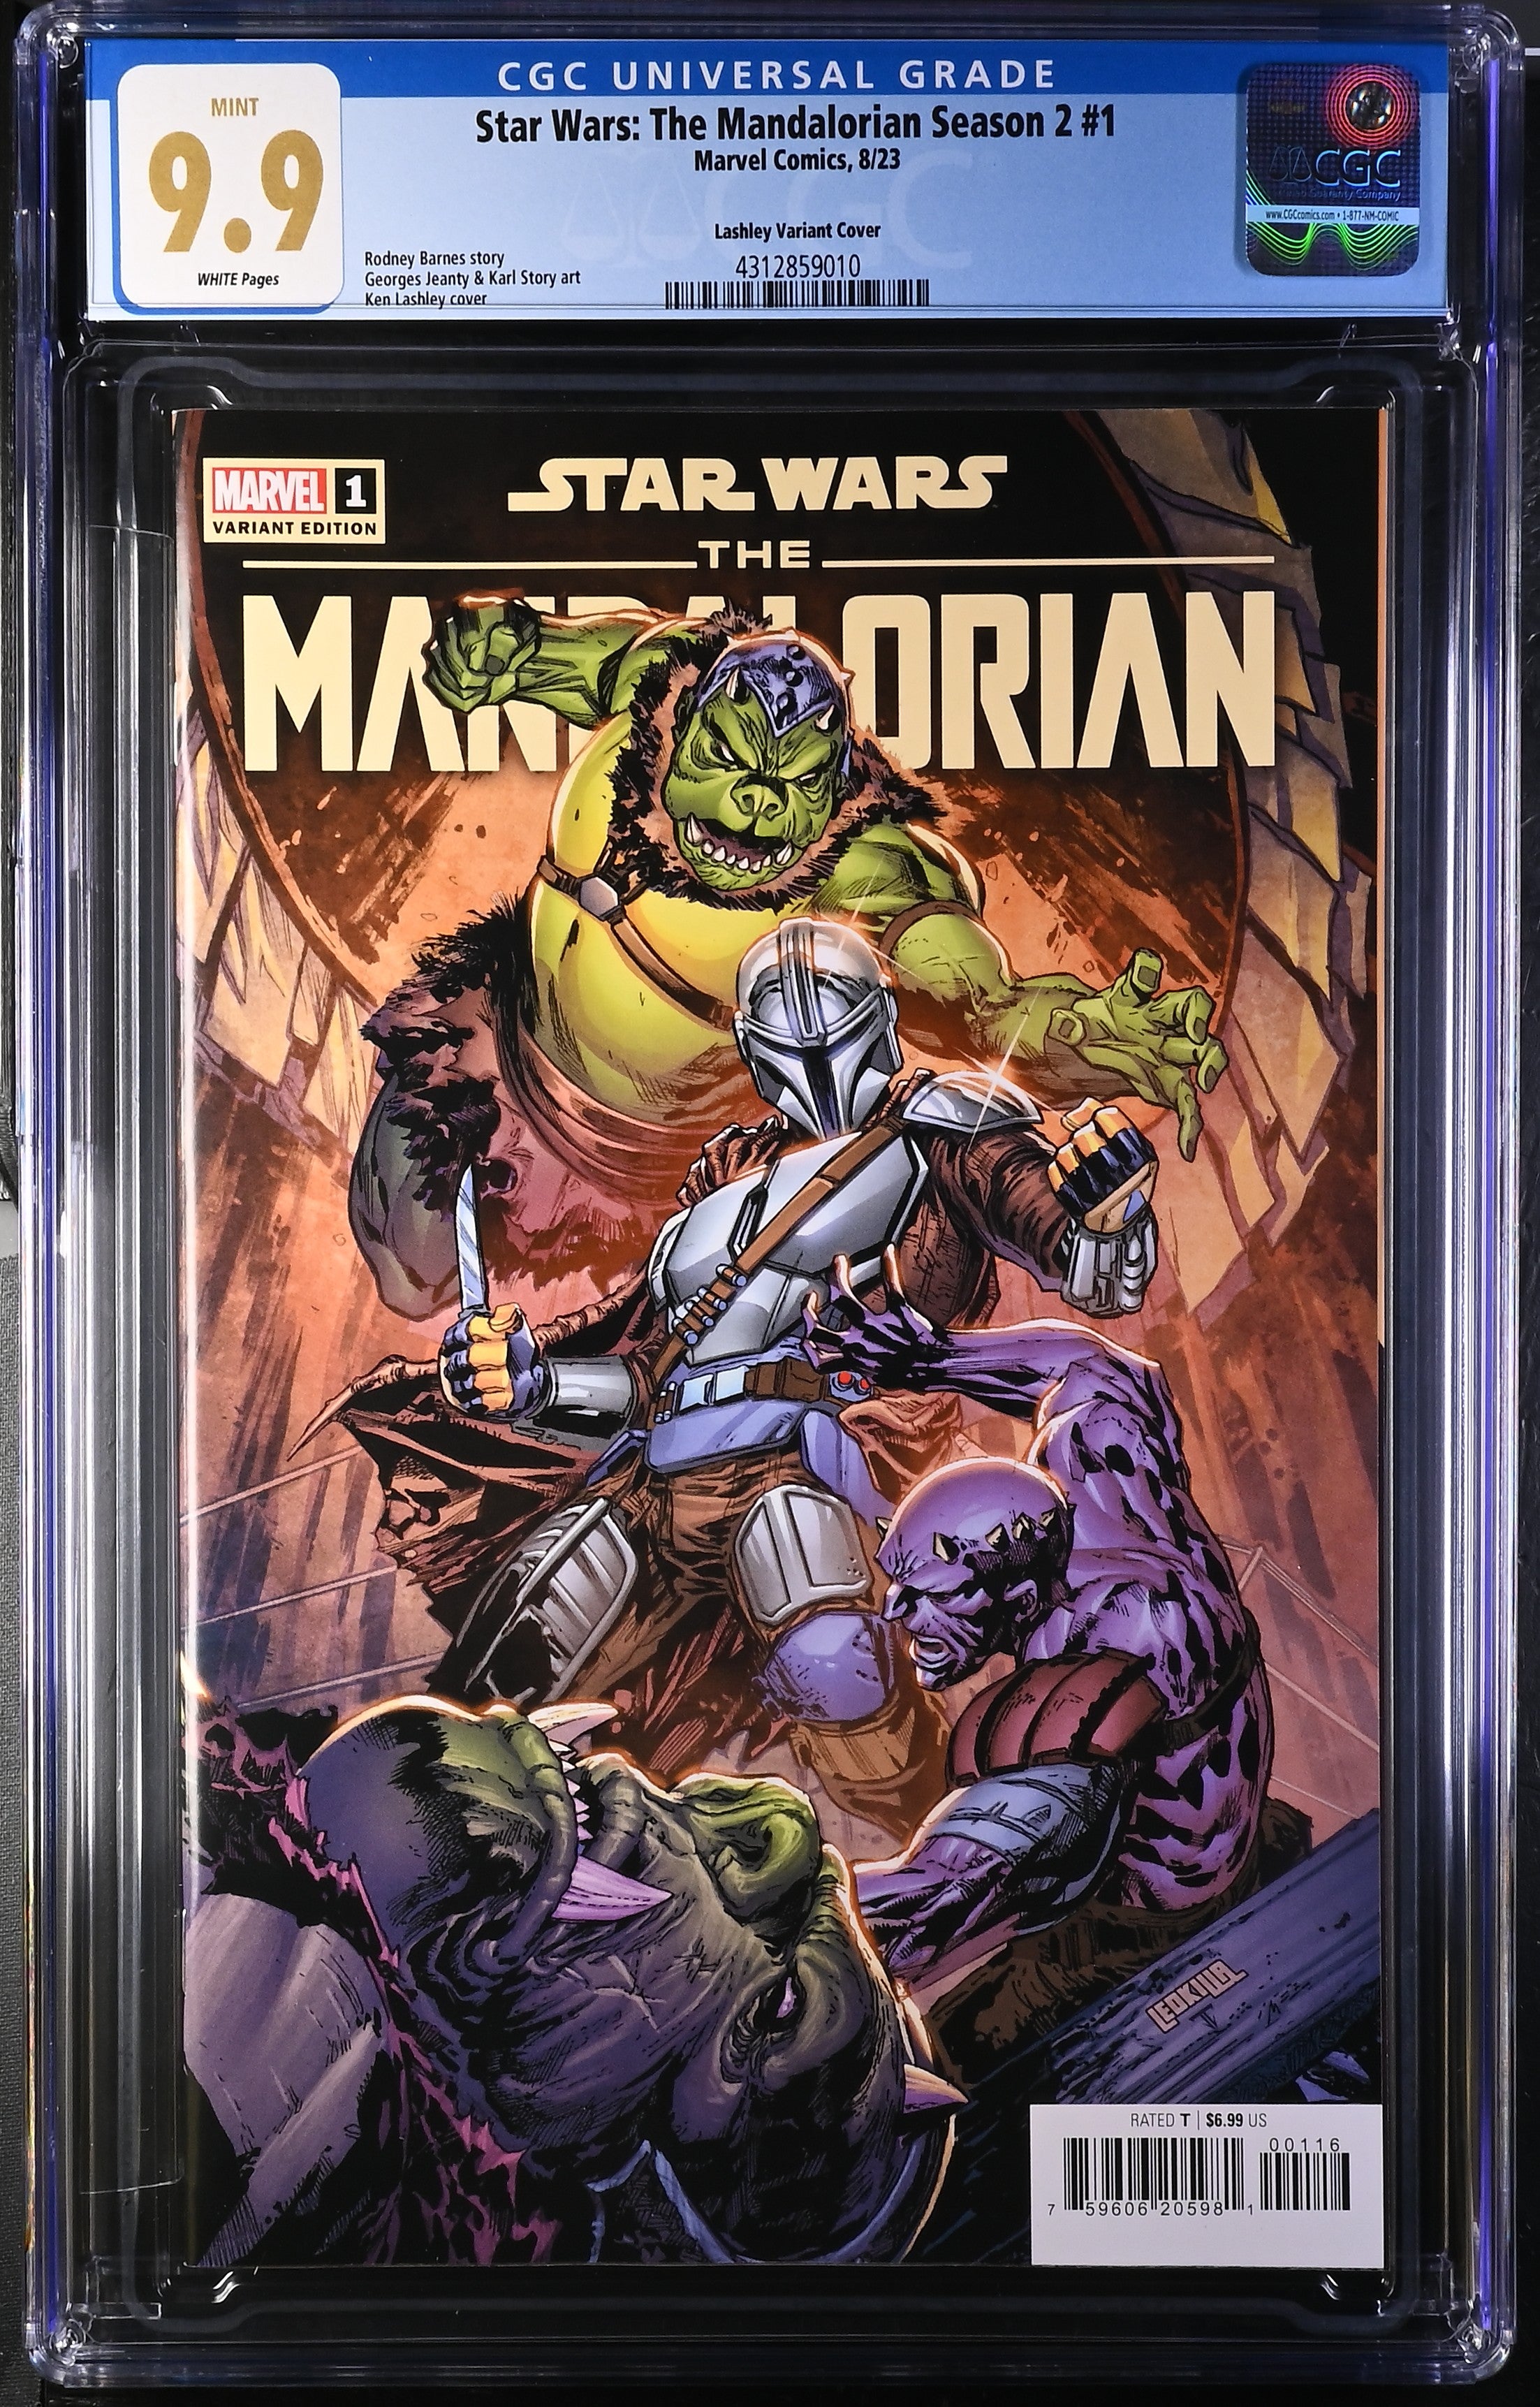 Star Wars: The Mandalorian Season 2 #1 Marvel Comics Lashley Variant Cover CGC Universal Grade Mint 9.9 GalaxyCon